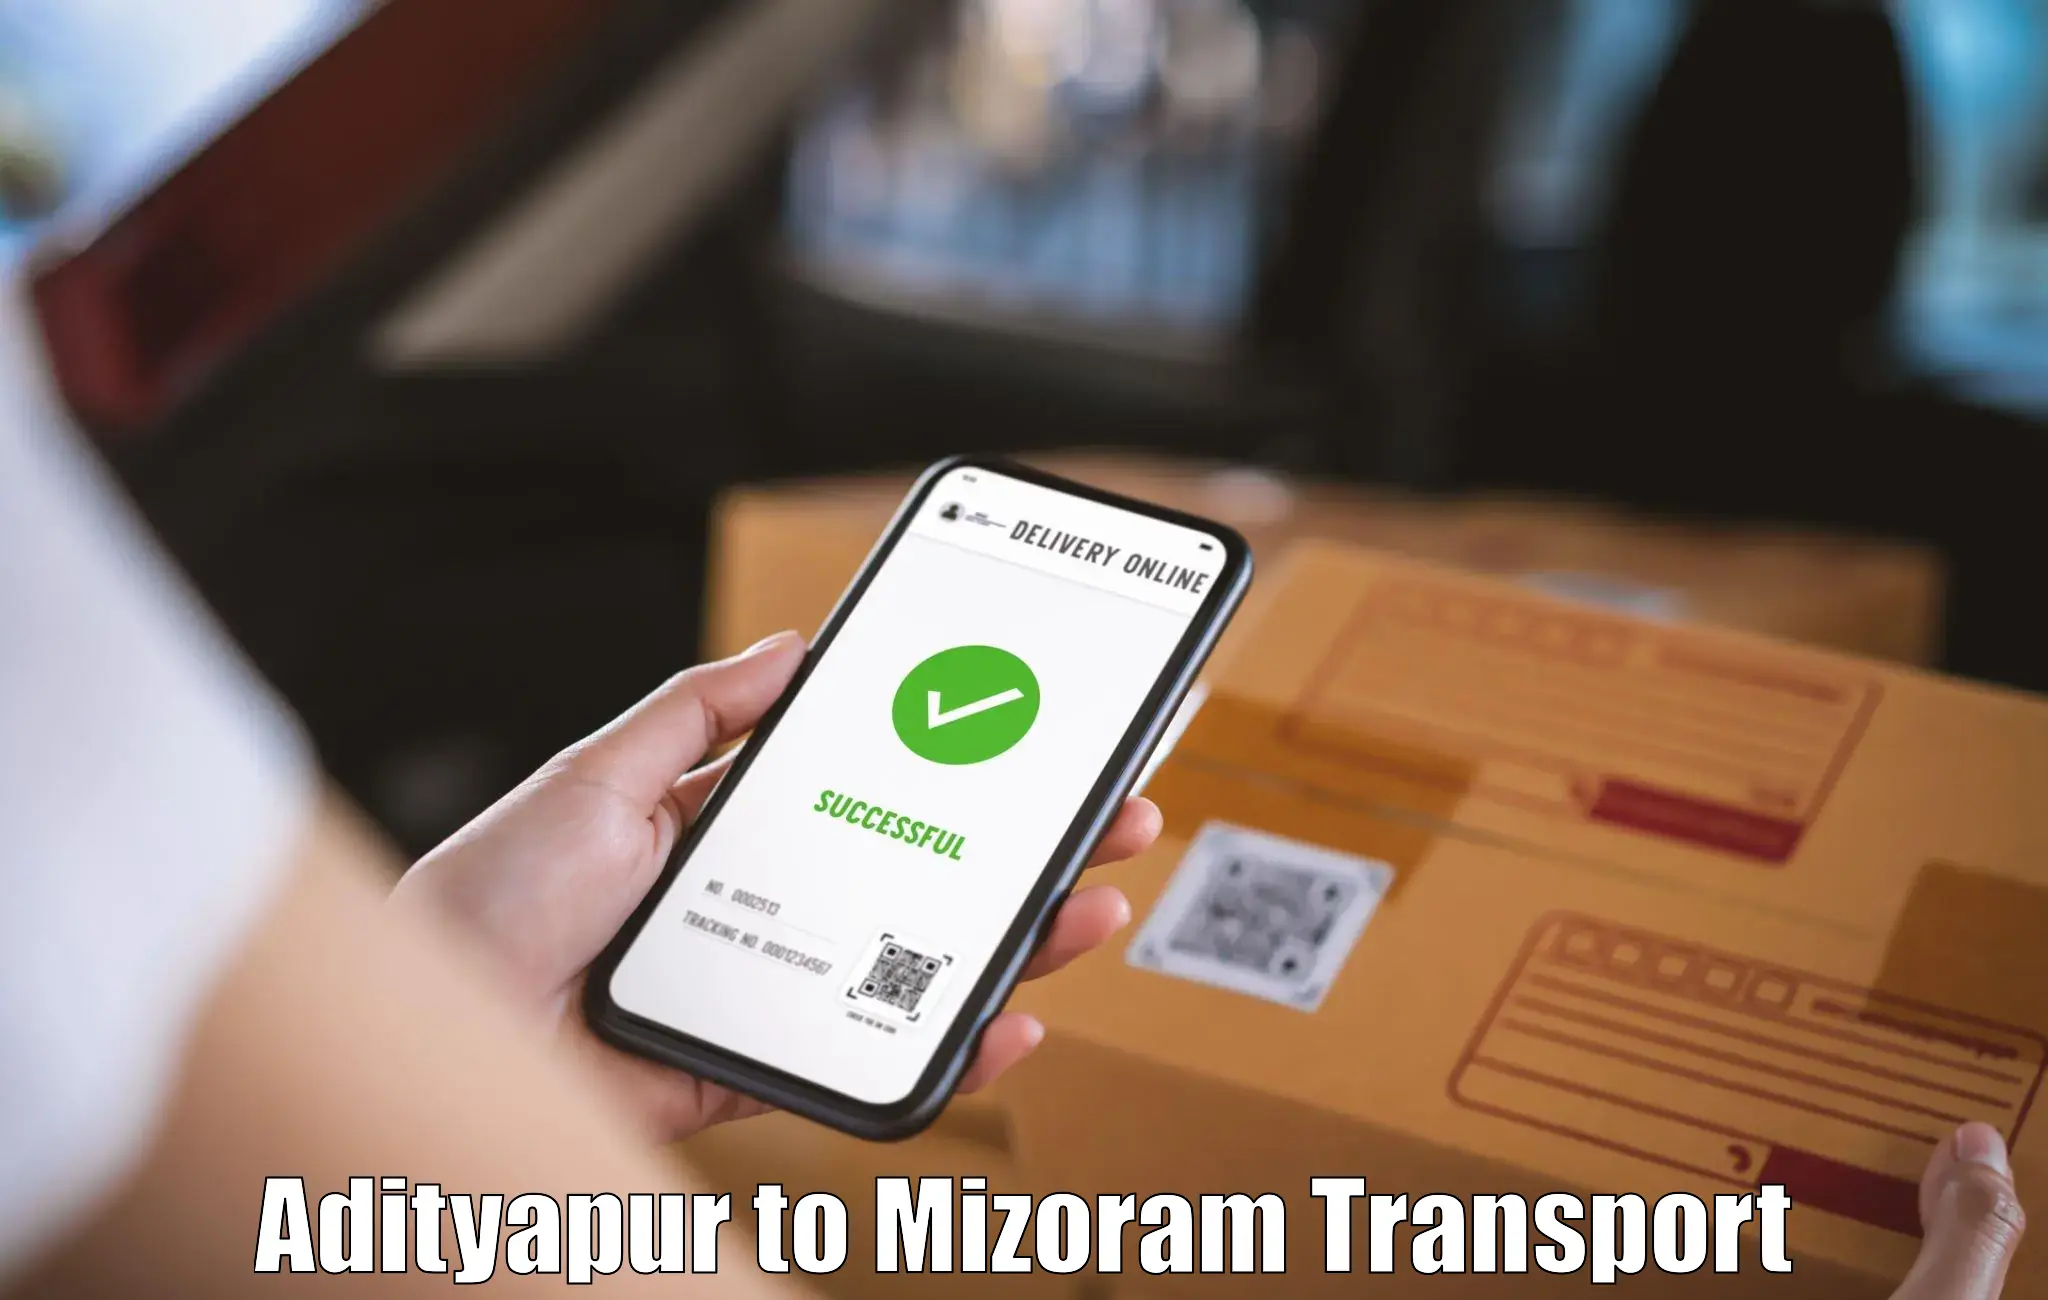 Transport in sharing Adityapur to Saitual